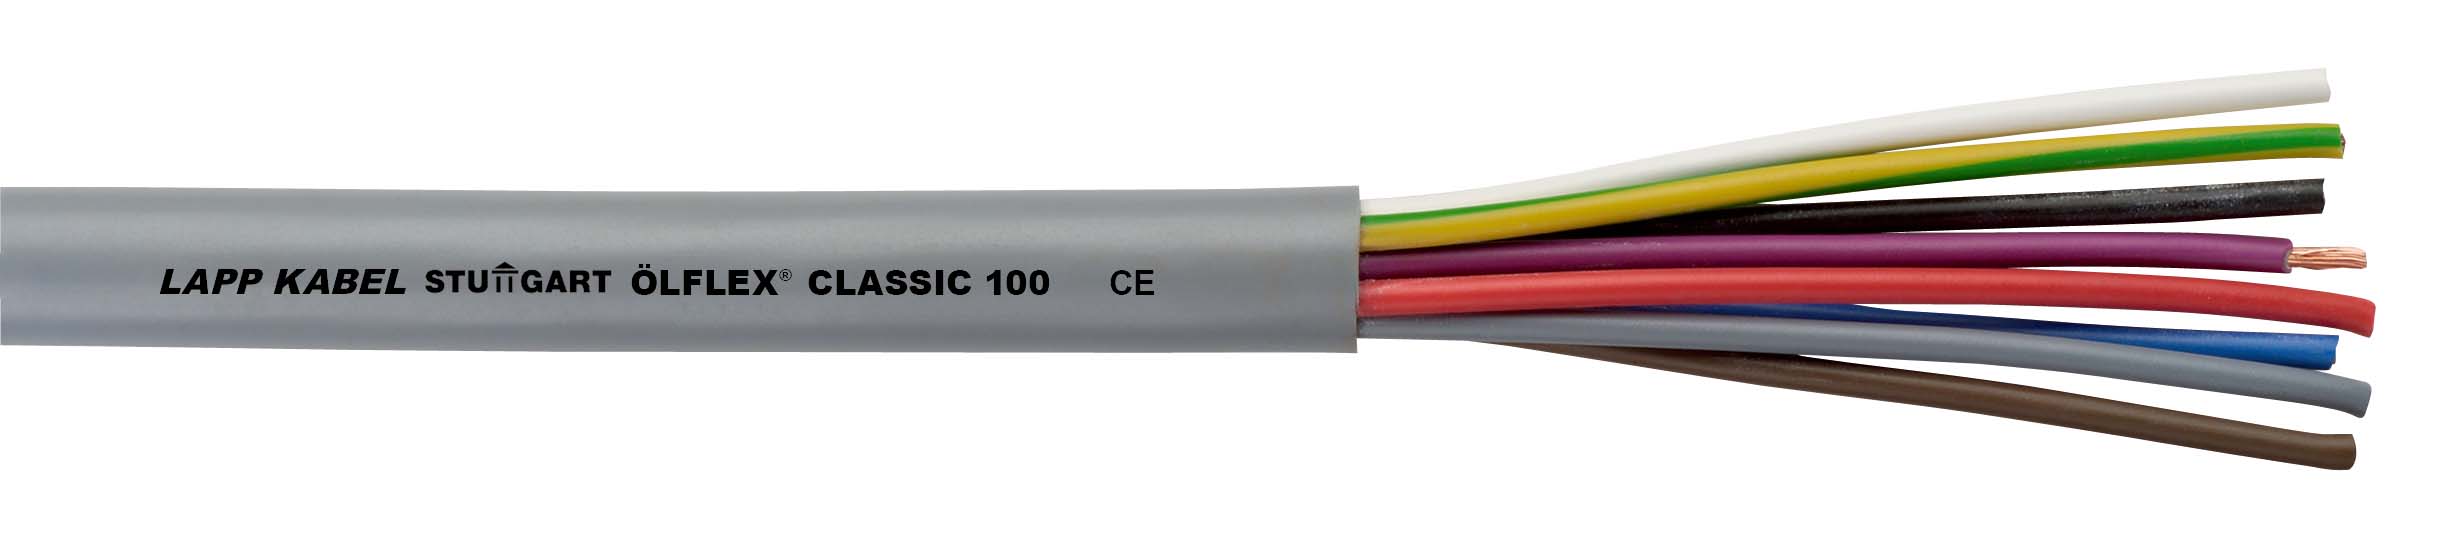 Lapp Kabel&Leitung ÖLFLEX CLASSIC 100 5G2,5 00100893 T500